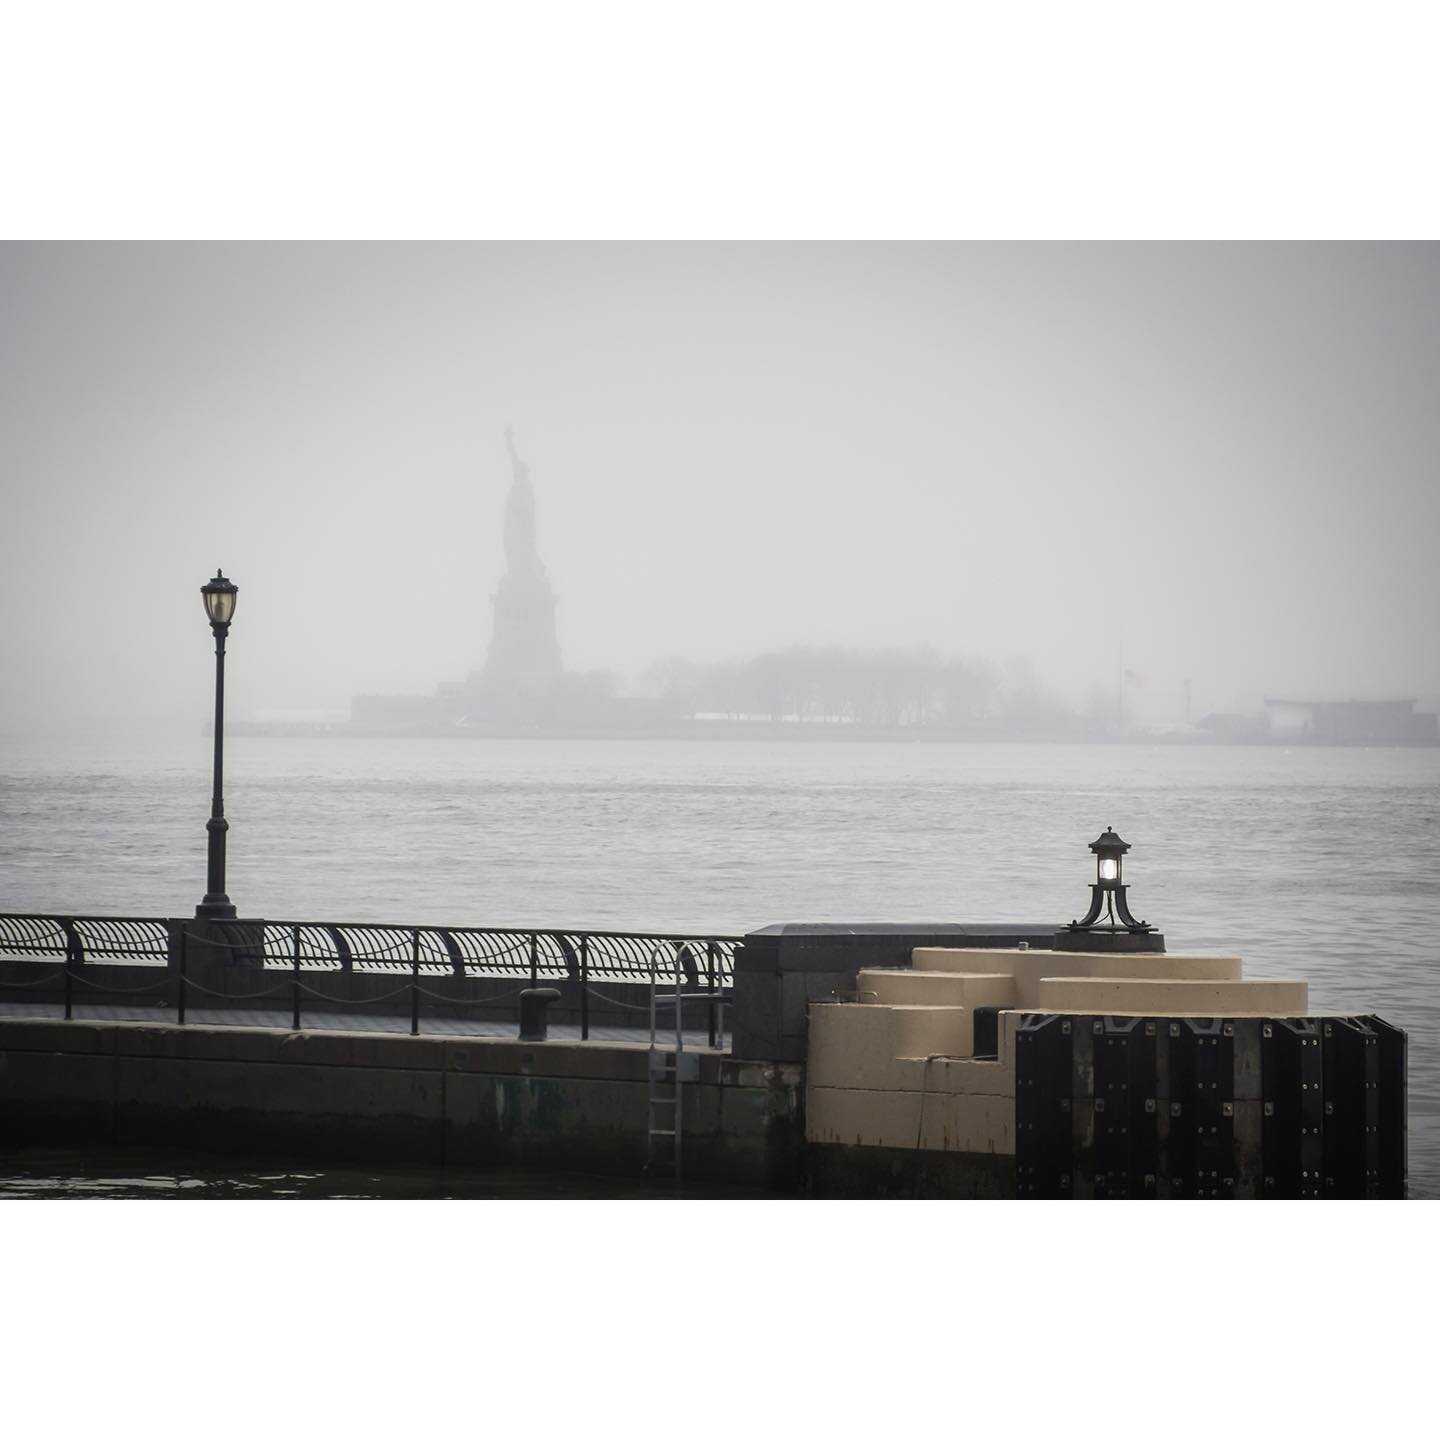 Foggy Liberty - NY
.
.

#NYC #LibertyStatue #EllisIsland #StatuedelaLibert&eacute; #foggyday #NYCphotography #ig_NYC #NewYorkphotography #inspiringphotography #igersNewYork #Hudsonriver #NewYorkNewYork #NYILoveYou #NewYork_ig #em5mkii #BigApple #pict